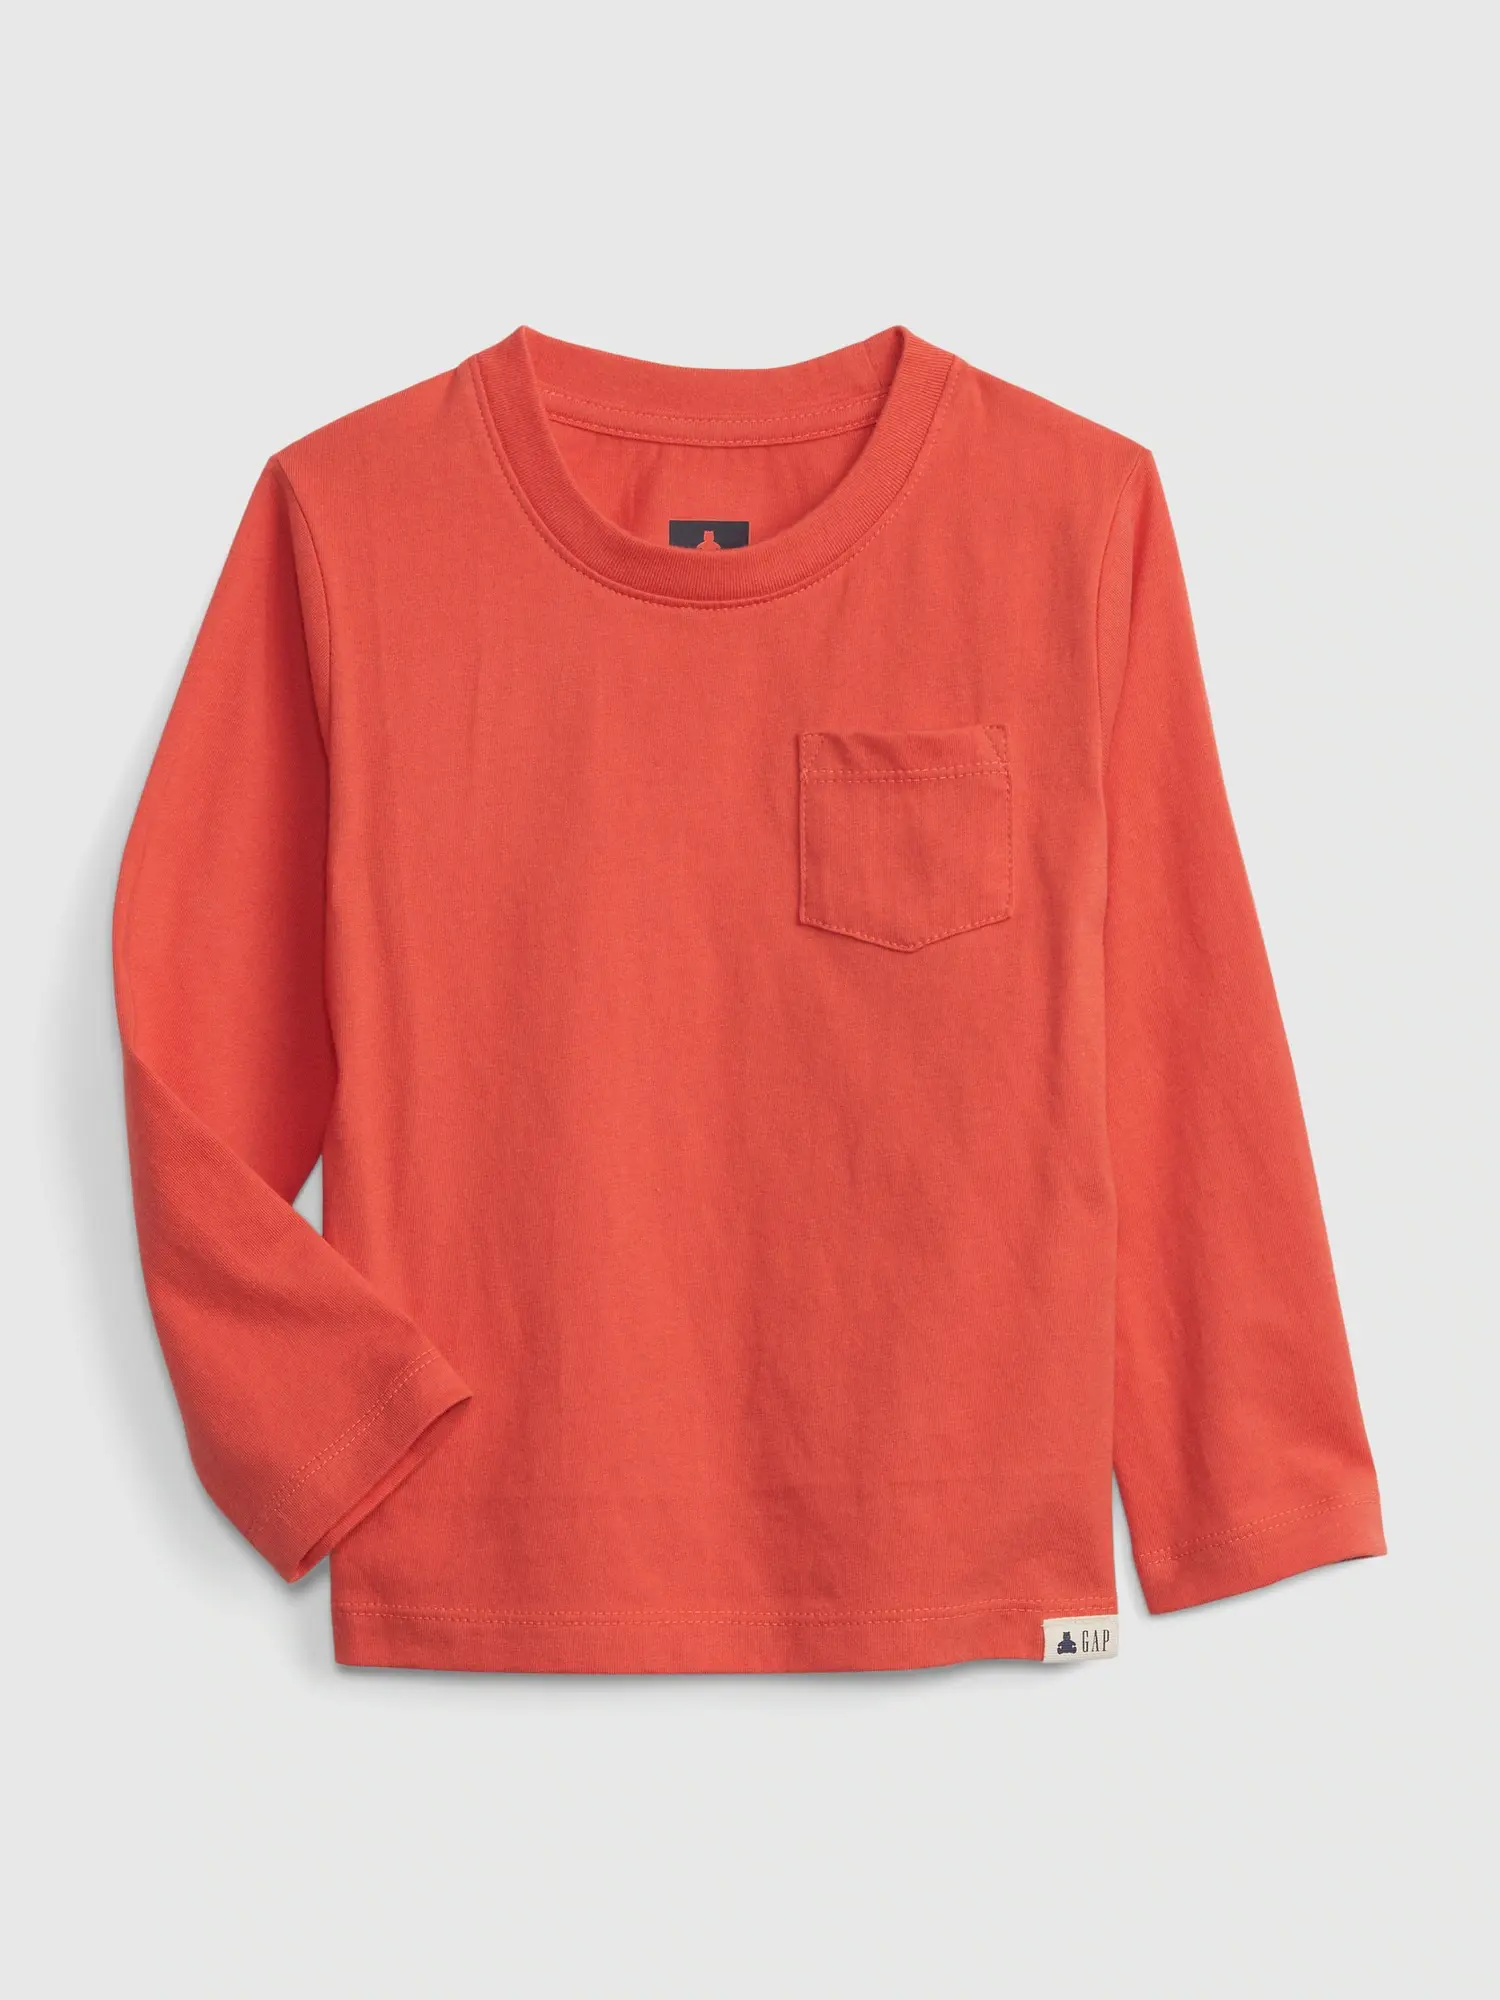 Gap Toddler 100% Organic Cotton Mix and Match T-Shirt red. 1